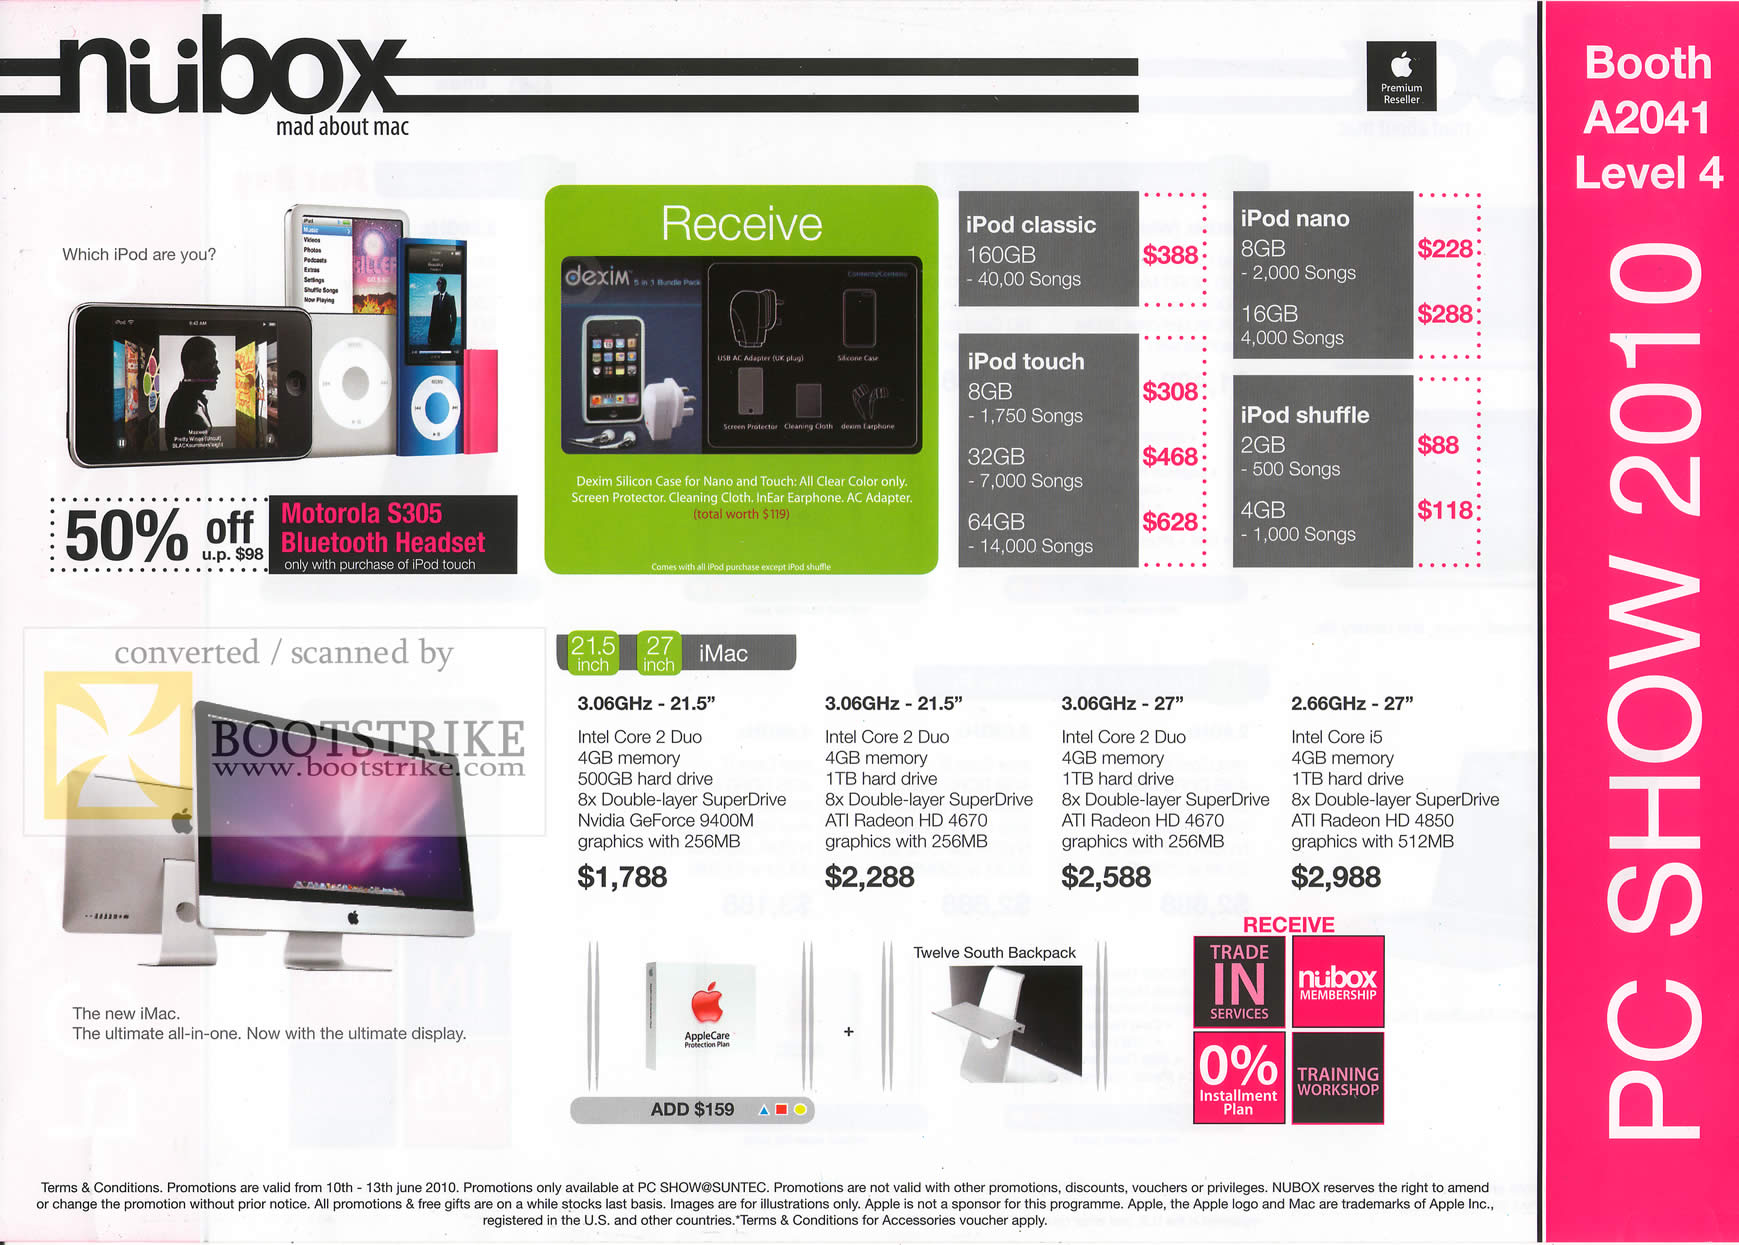 PC Show 2010 price list image brochure of Nubox IPod Classic Touch Nano Shuffle IMac